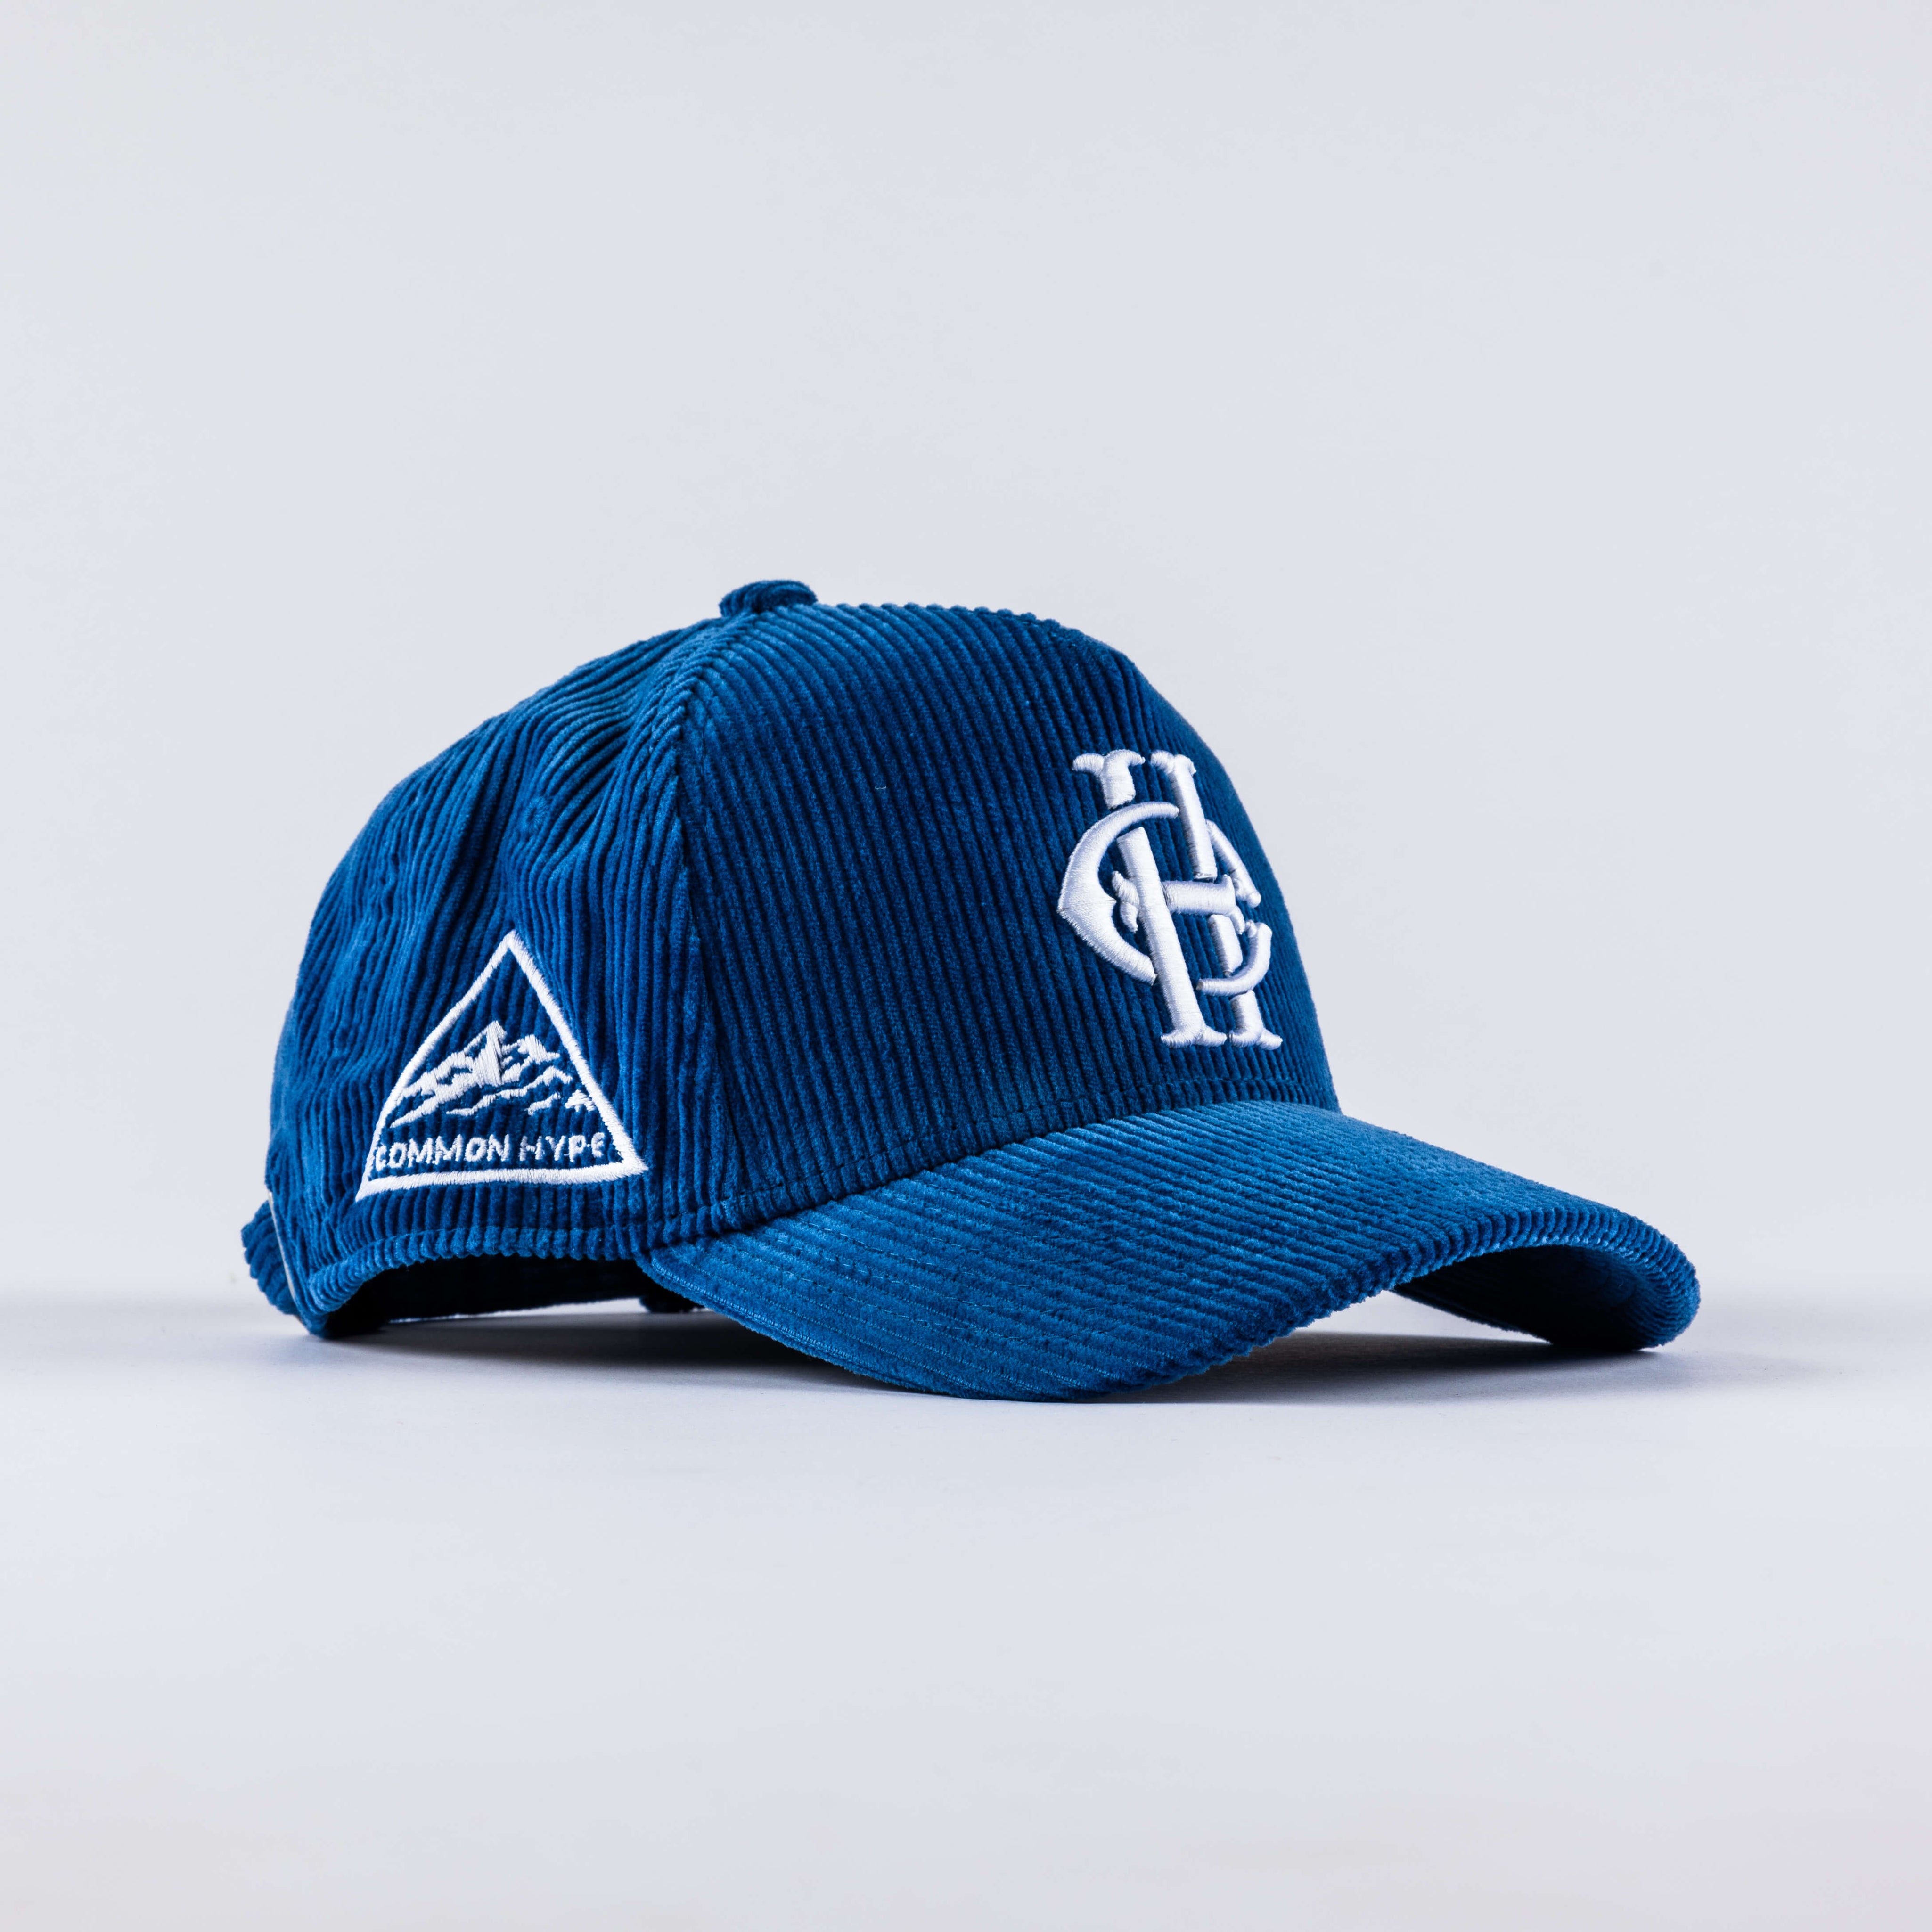 Common Hype Corduroy Blue Hat